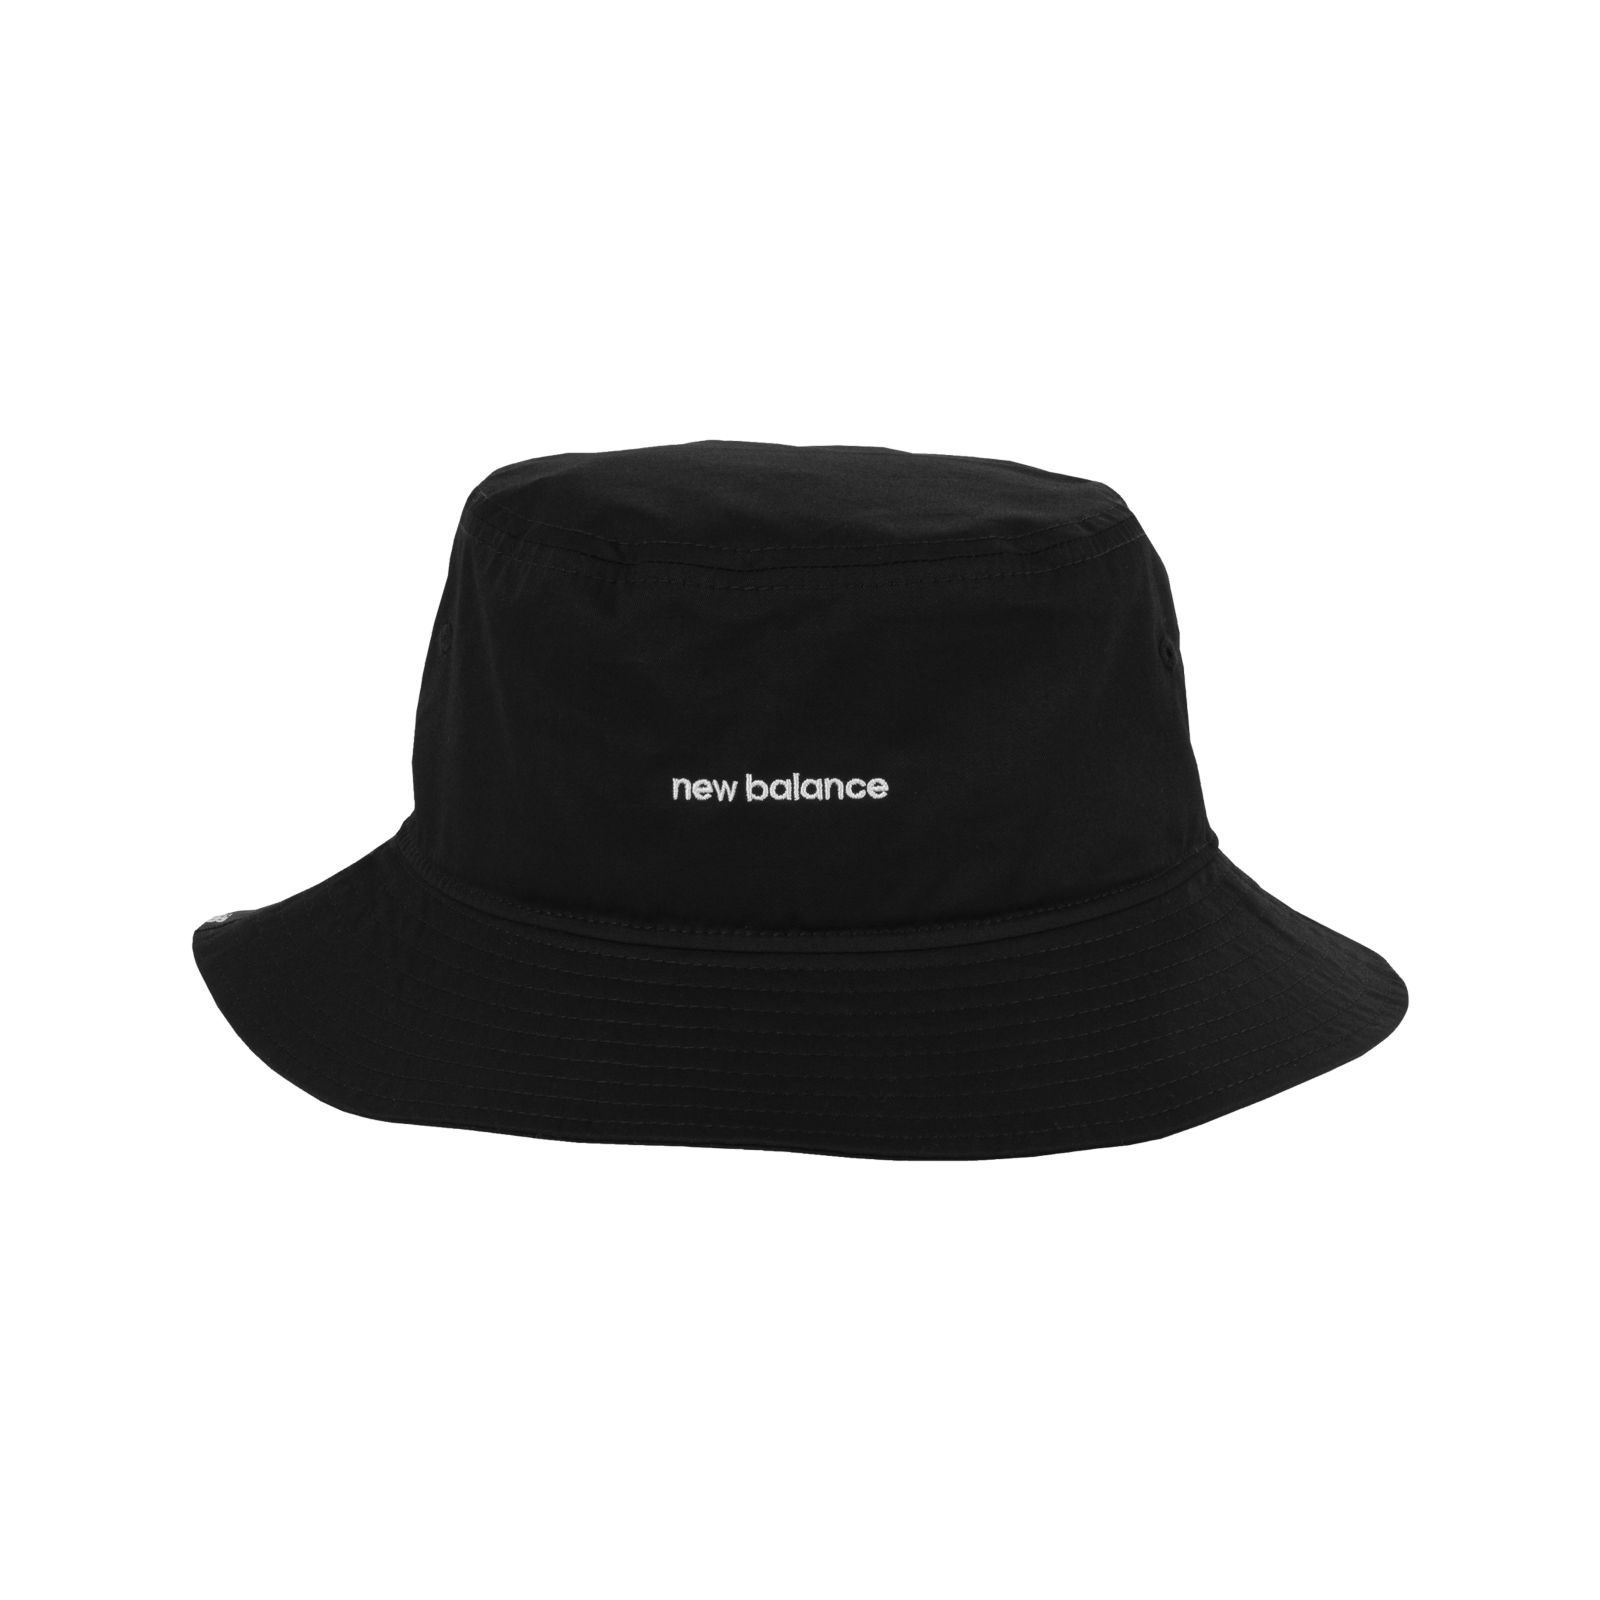 New Balance Black Bucket Hat